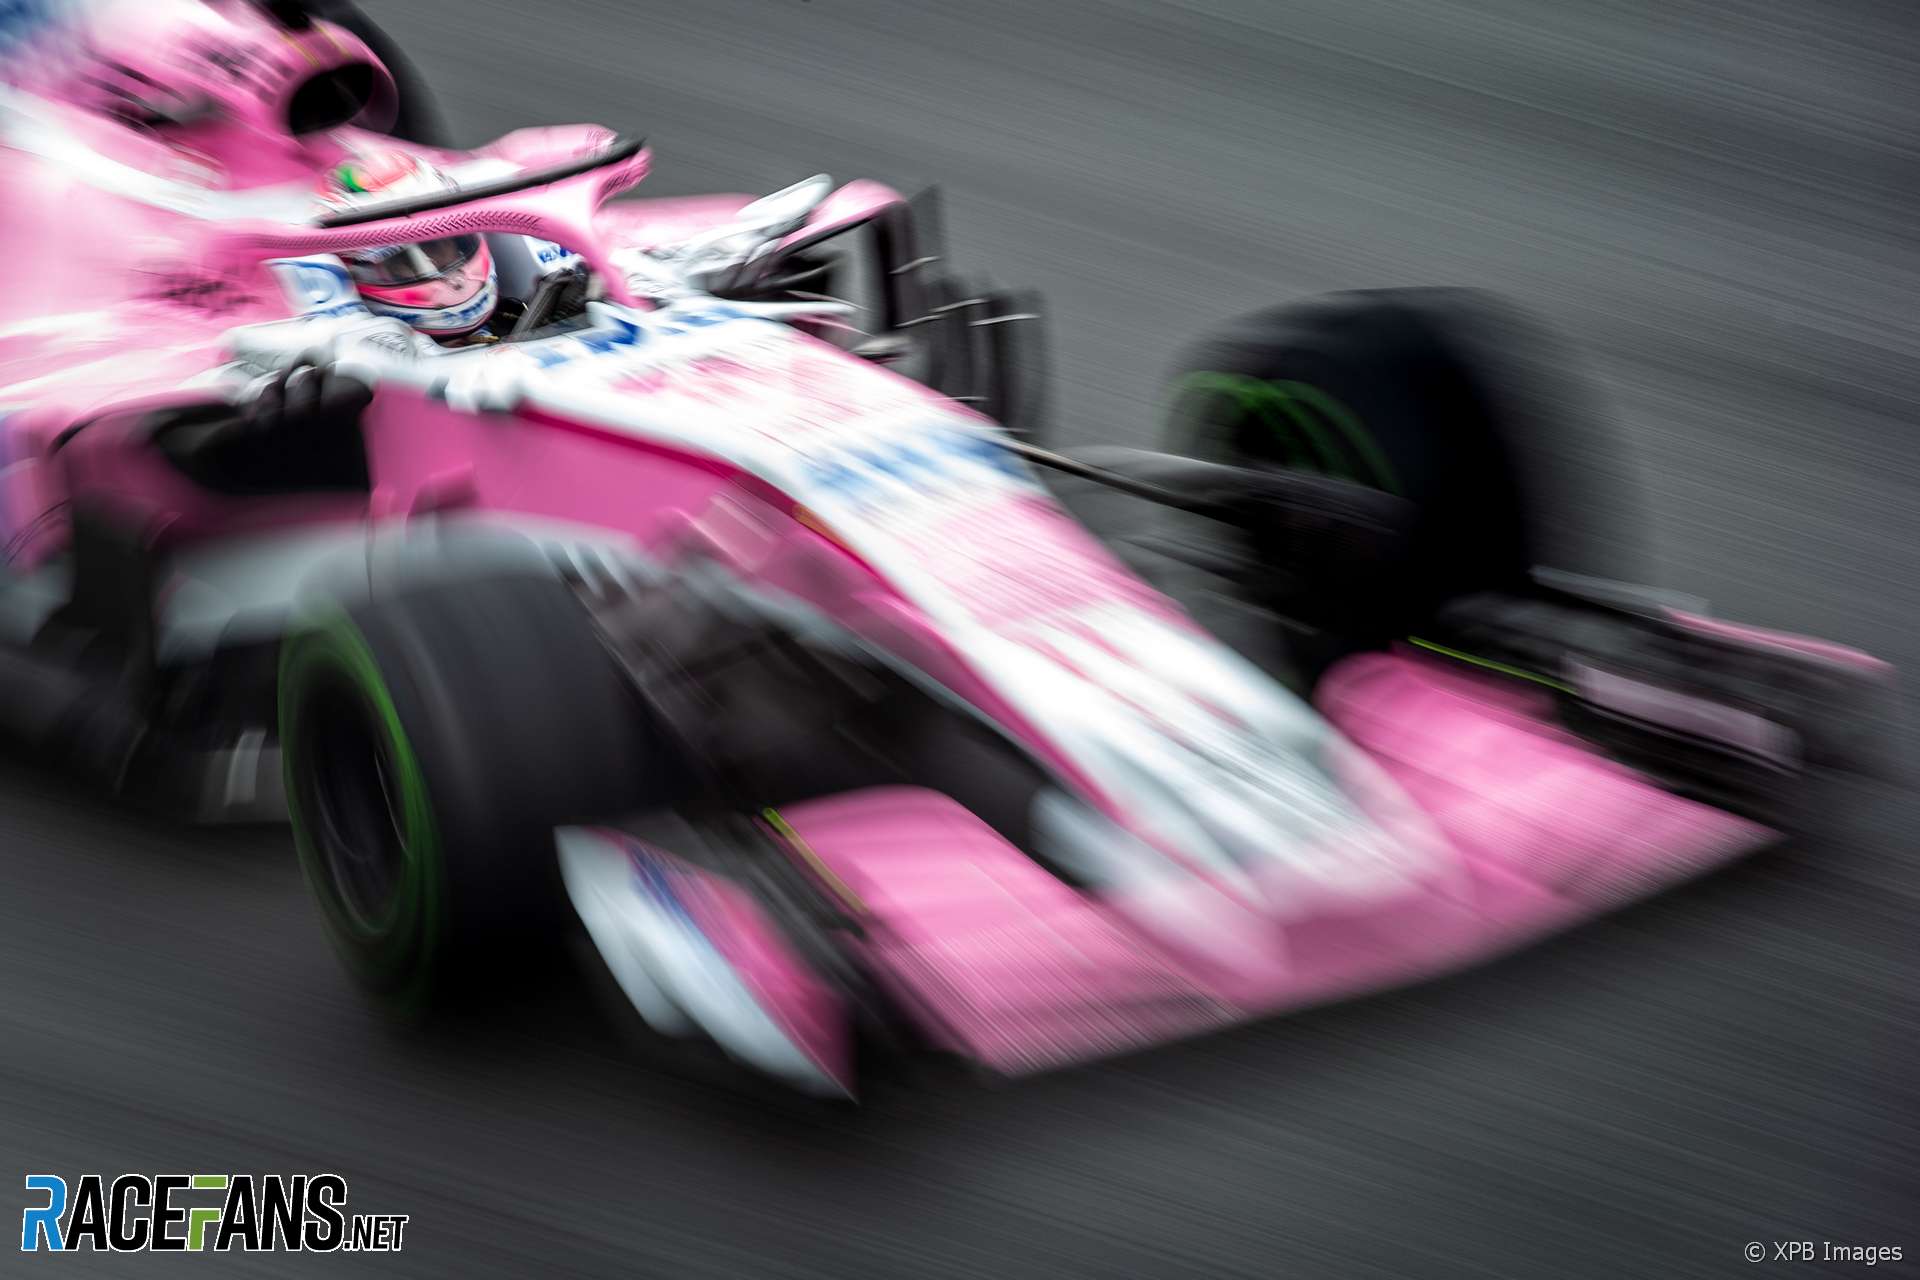 Sergio Perez, Force India, Monza, 2018